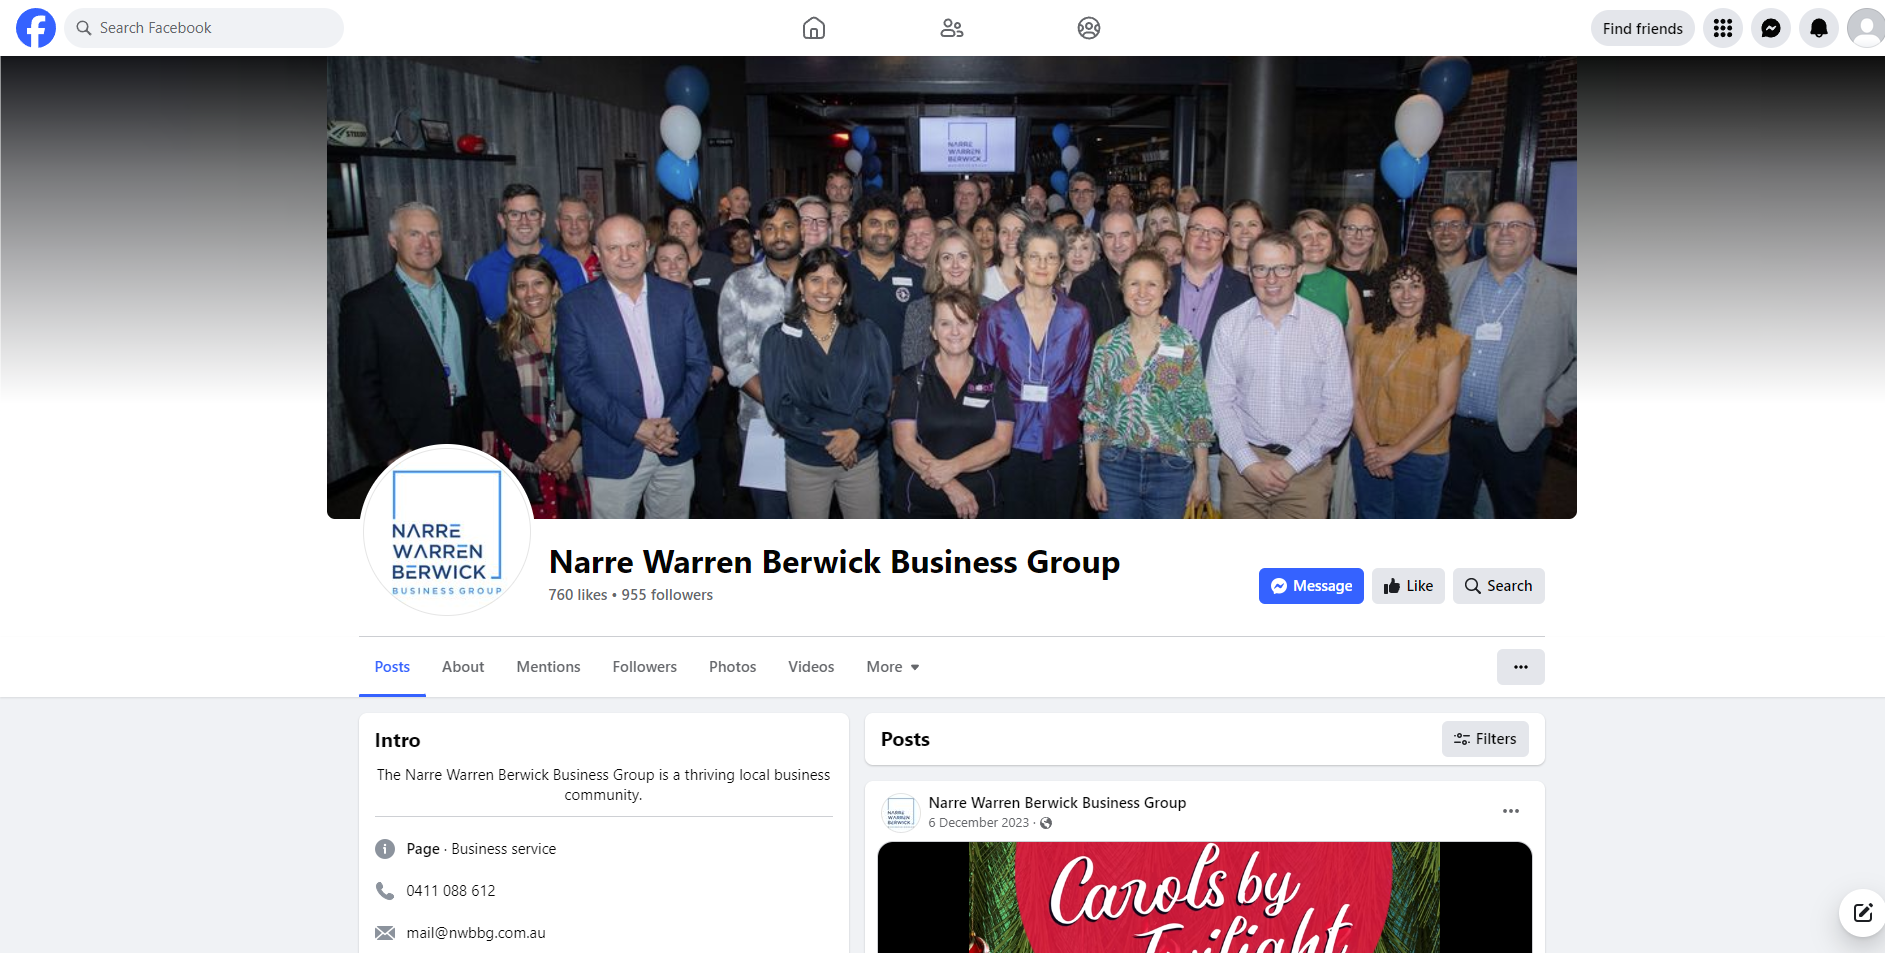 Narre Warren Berwick Business Group